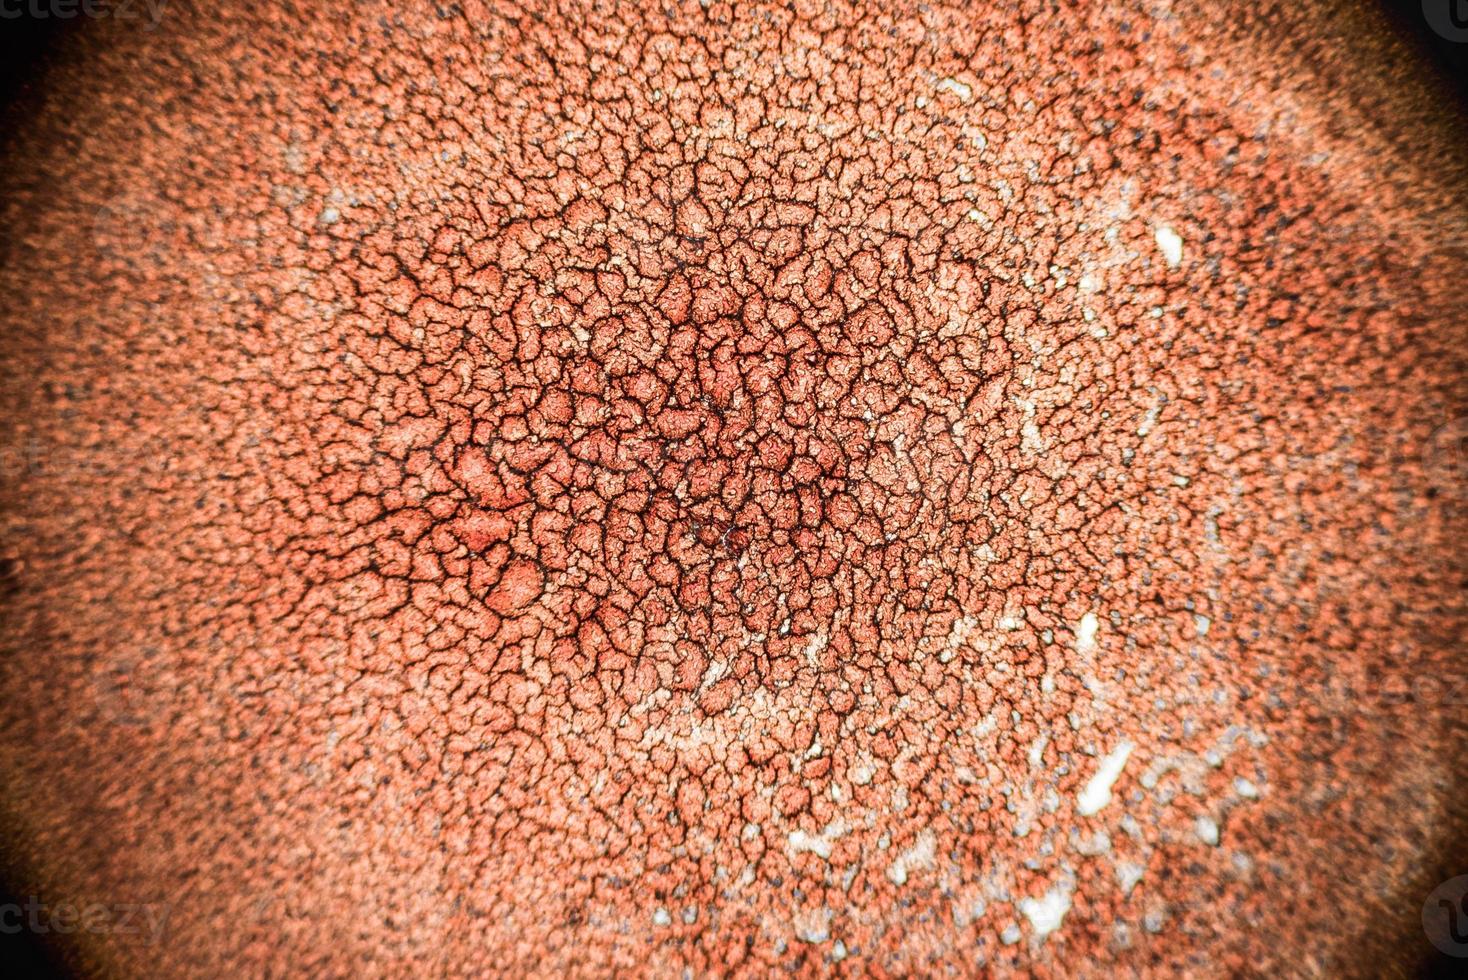 stelnat koagulerat blod sett i en 100x mikroskopvy. blodutstryk under mikroskop presentera neutrofiler och röda blodkroppar foto